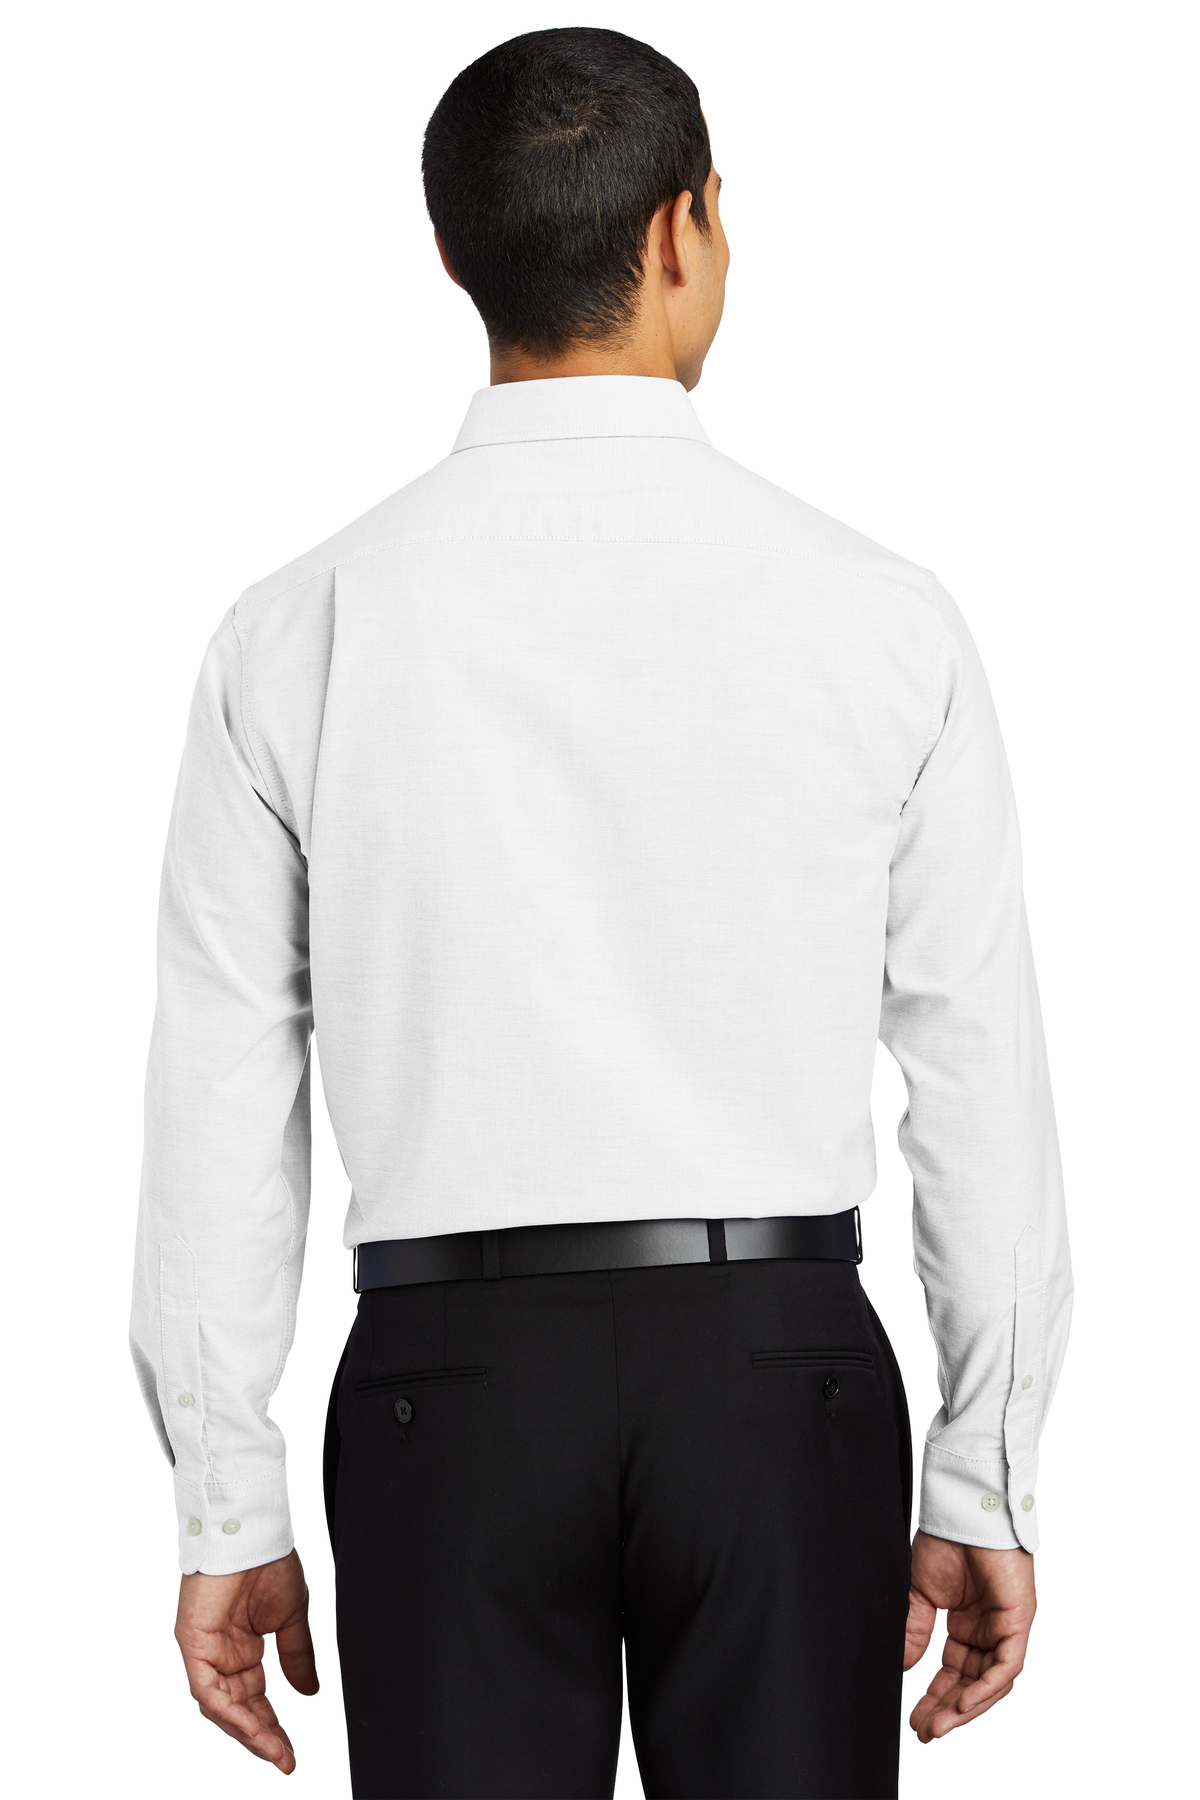 Port Authority Mens Short Sleeve SuperPro Button Down Oxford Shirt S659